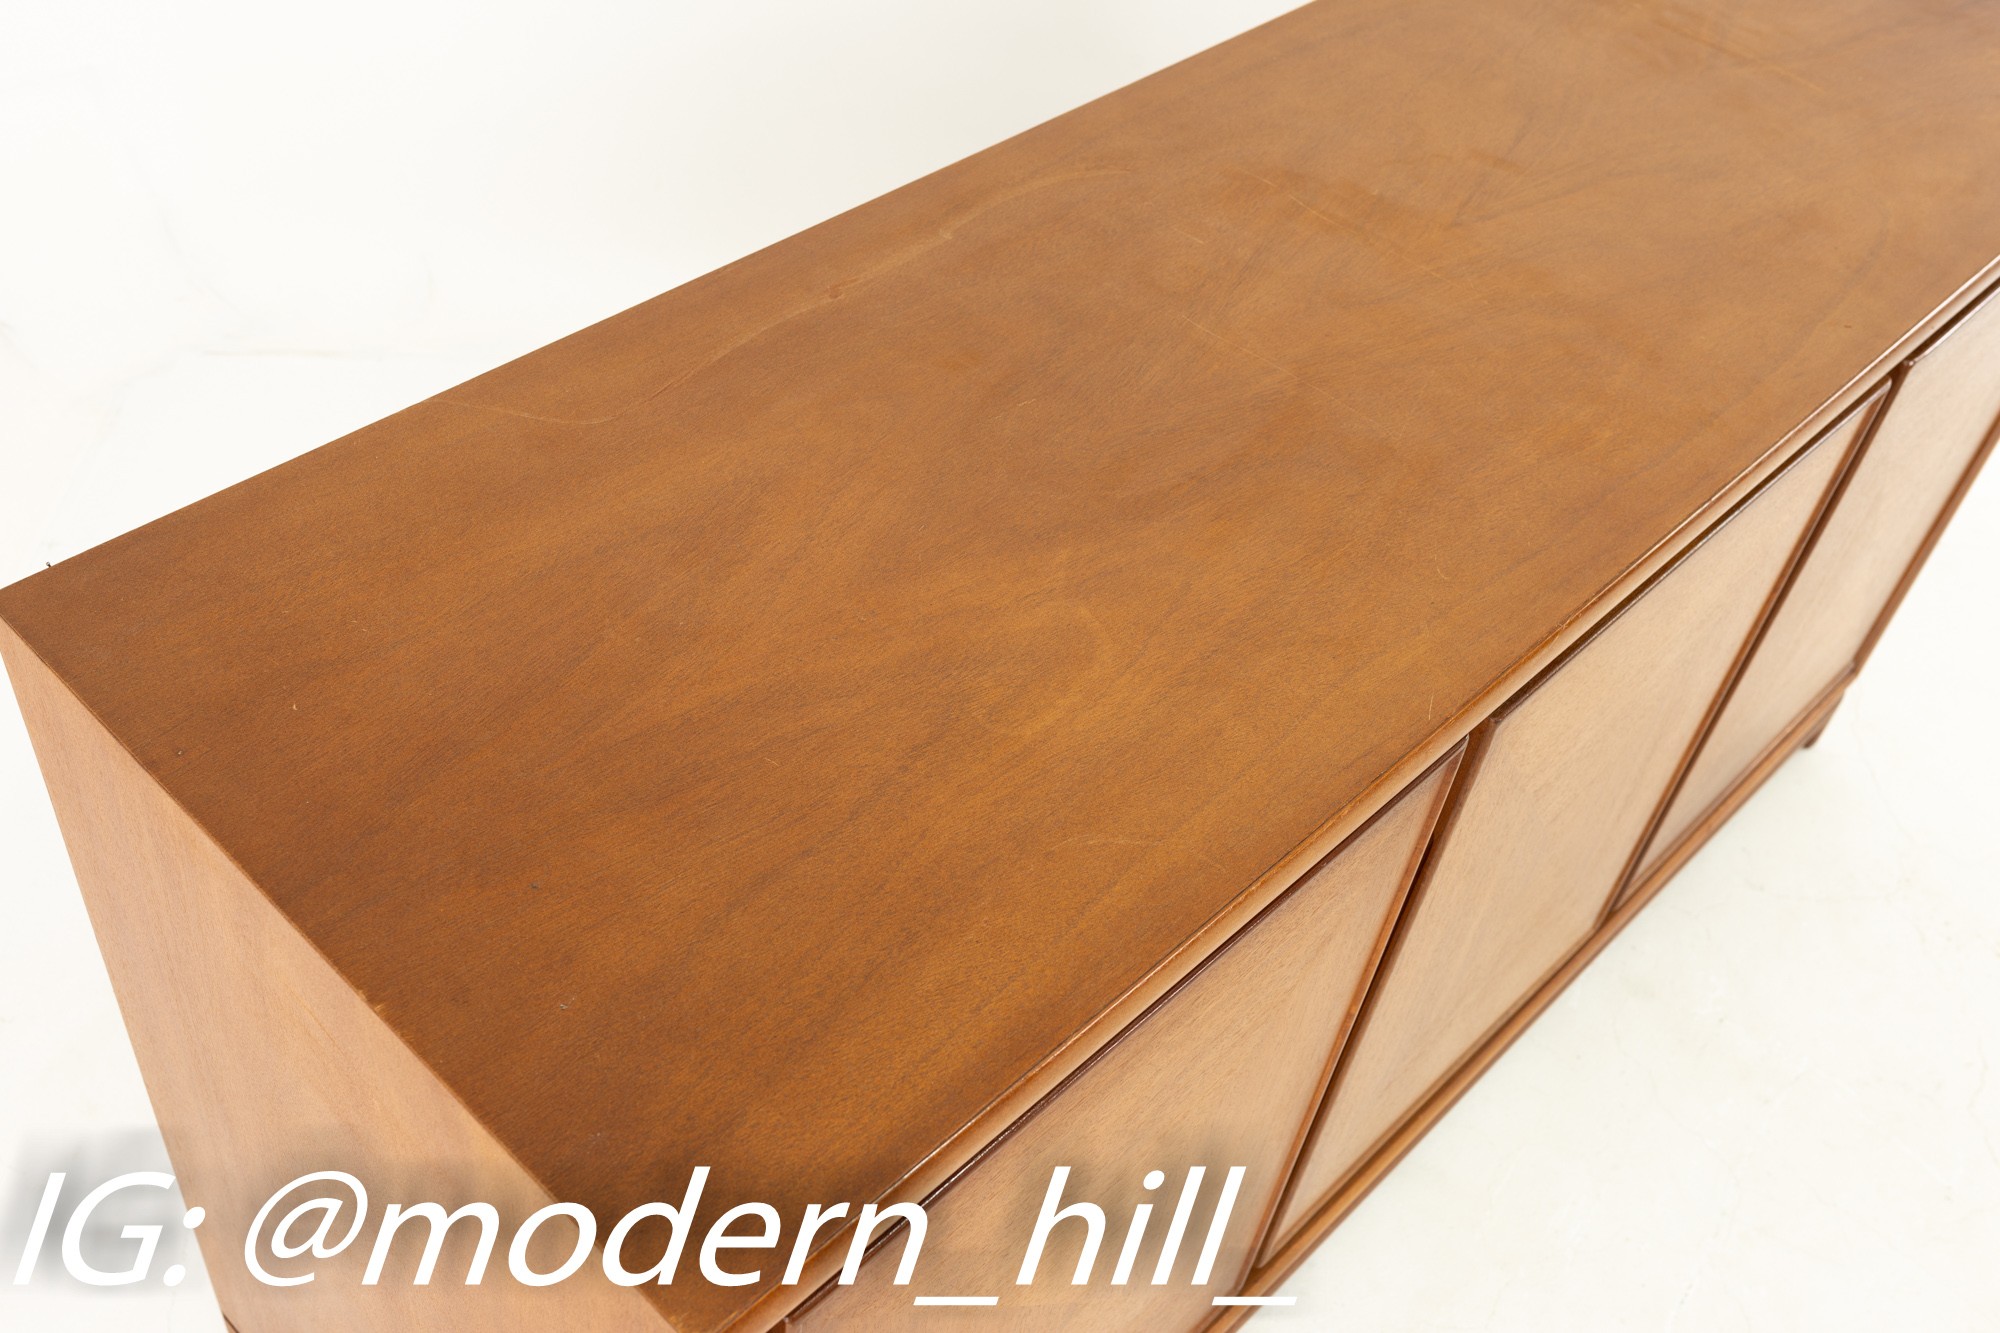 Paul Laszlo Style Stewartstown Furniture Mid Century Buffet Sideboard Credenza